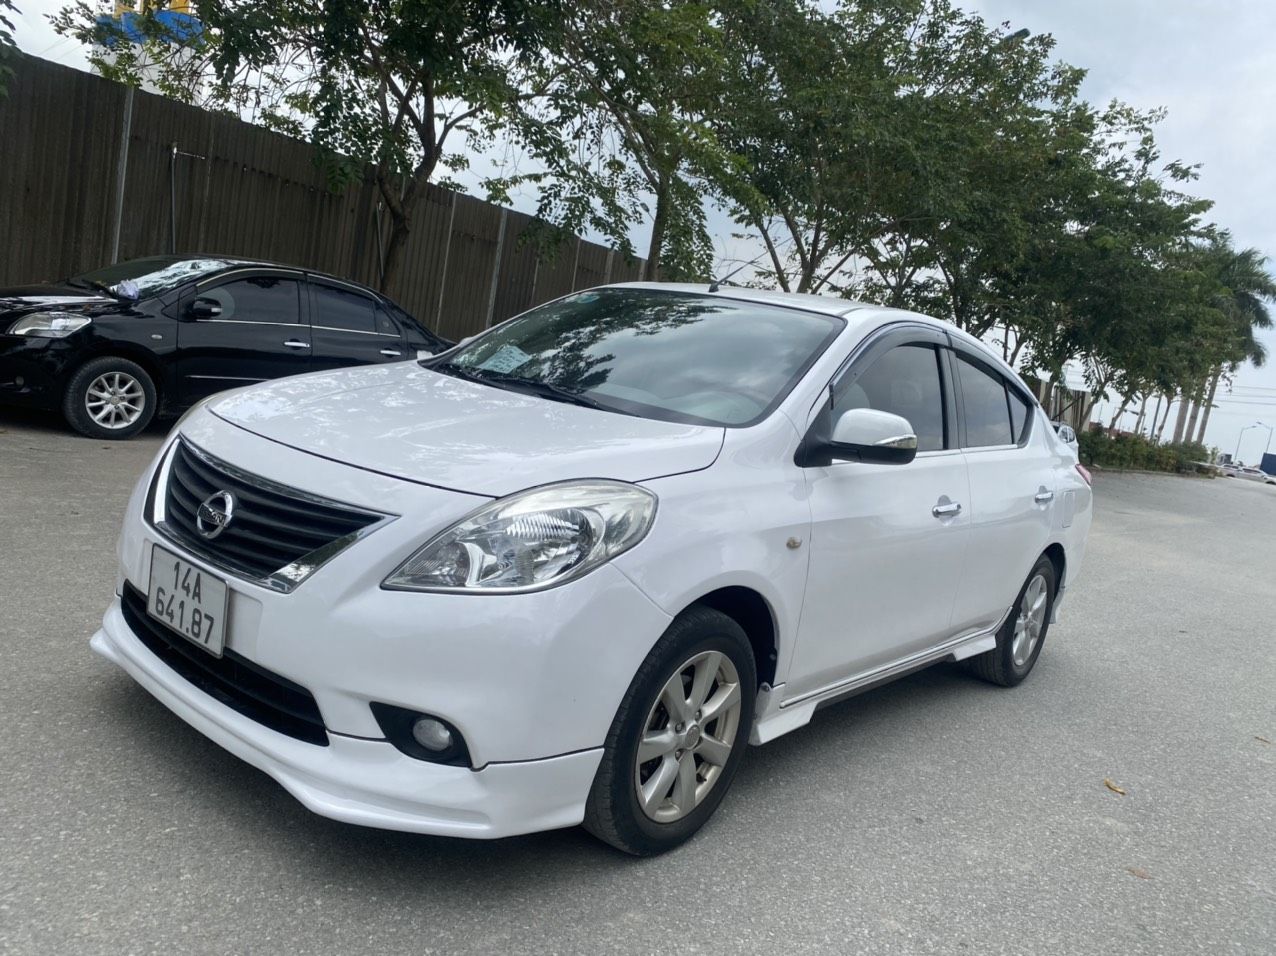 Nissan Sunny 2018 - Gốc Hà Nội (đỡ được 20 triệu vào biển)